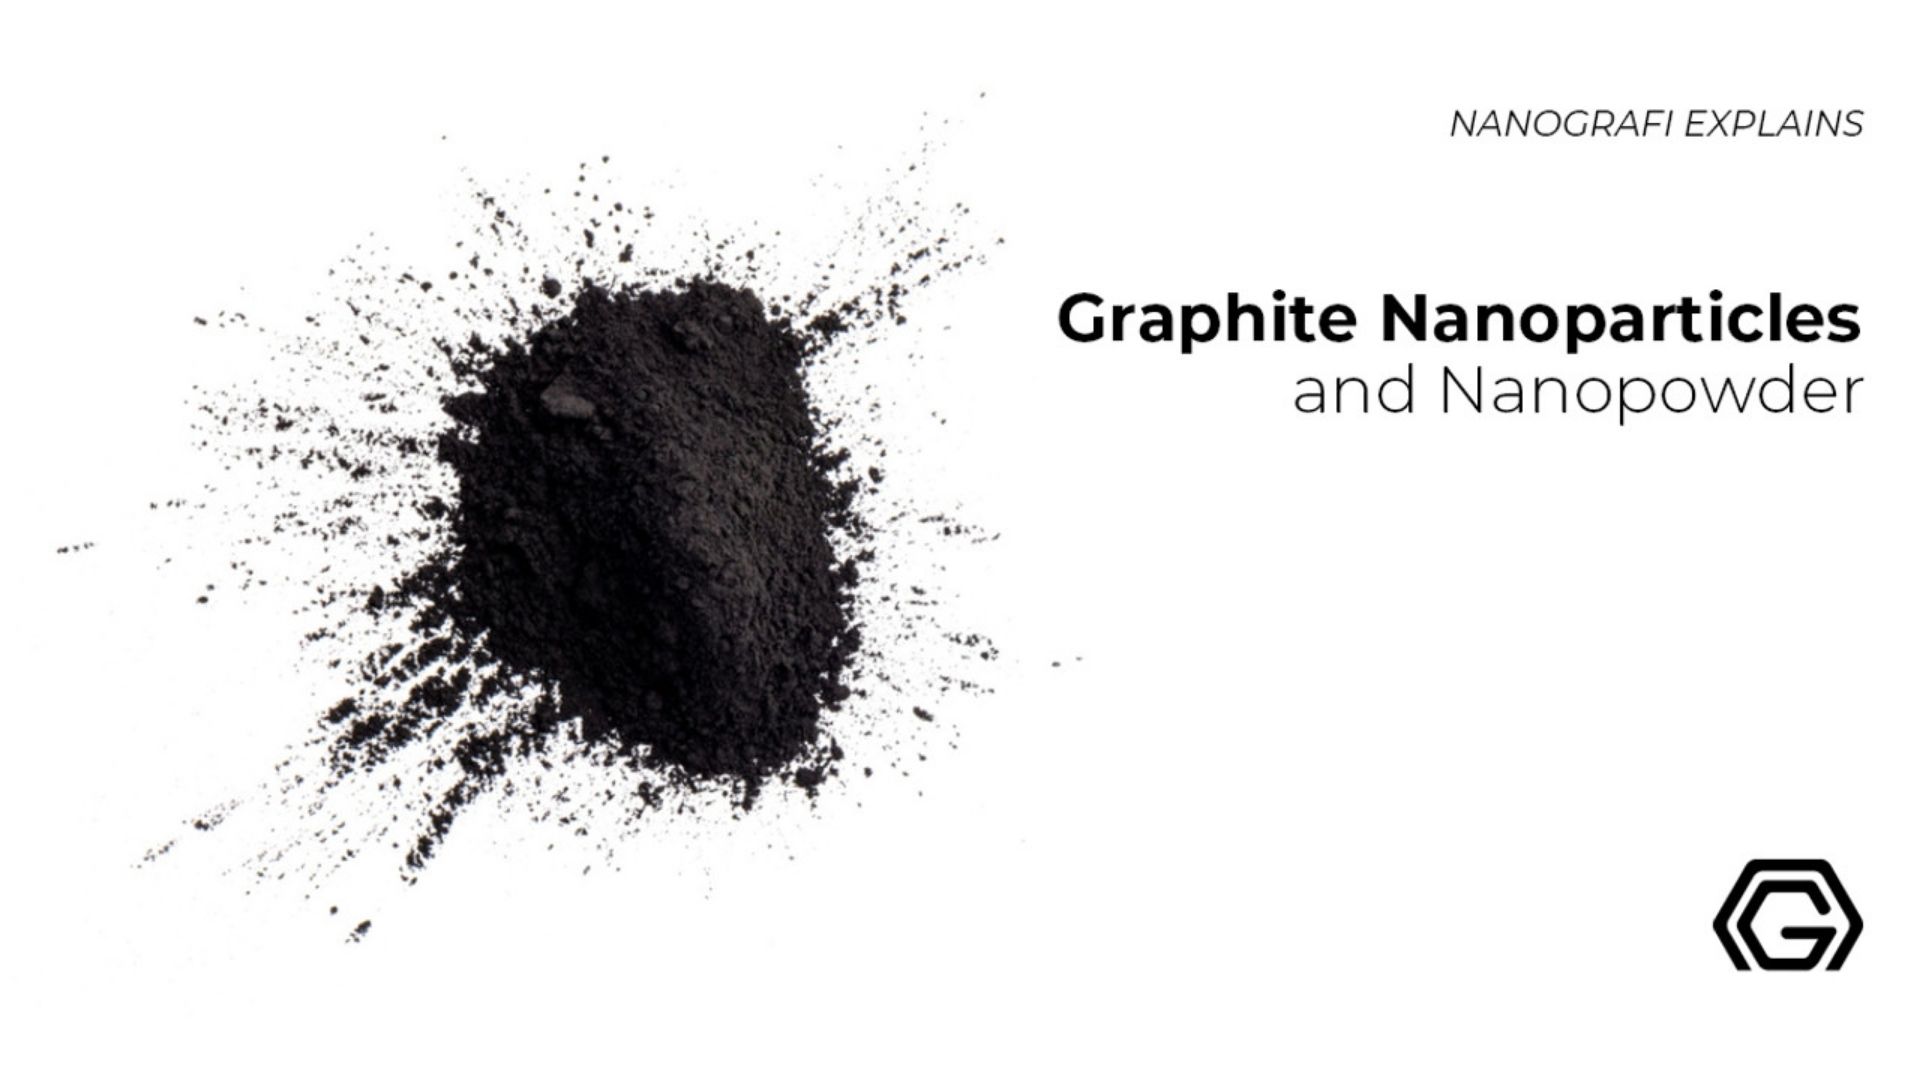 Graphite nanoparticles and nanopowder